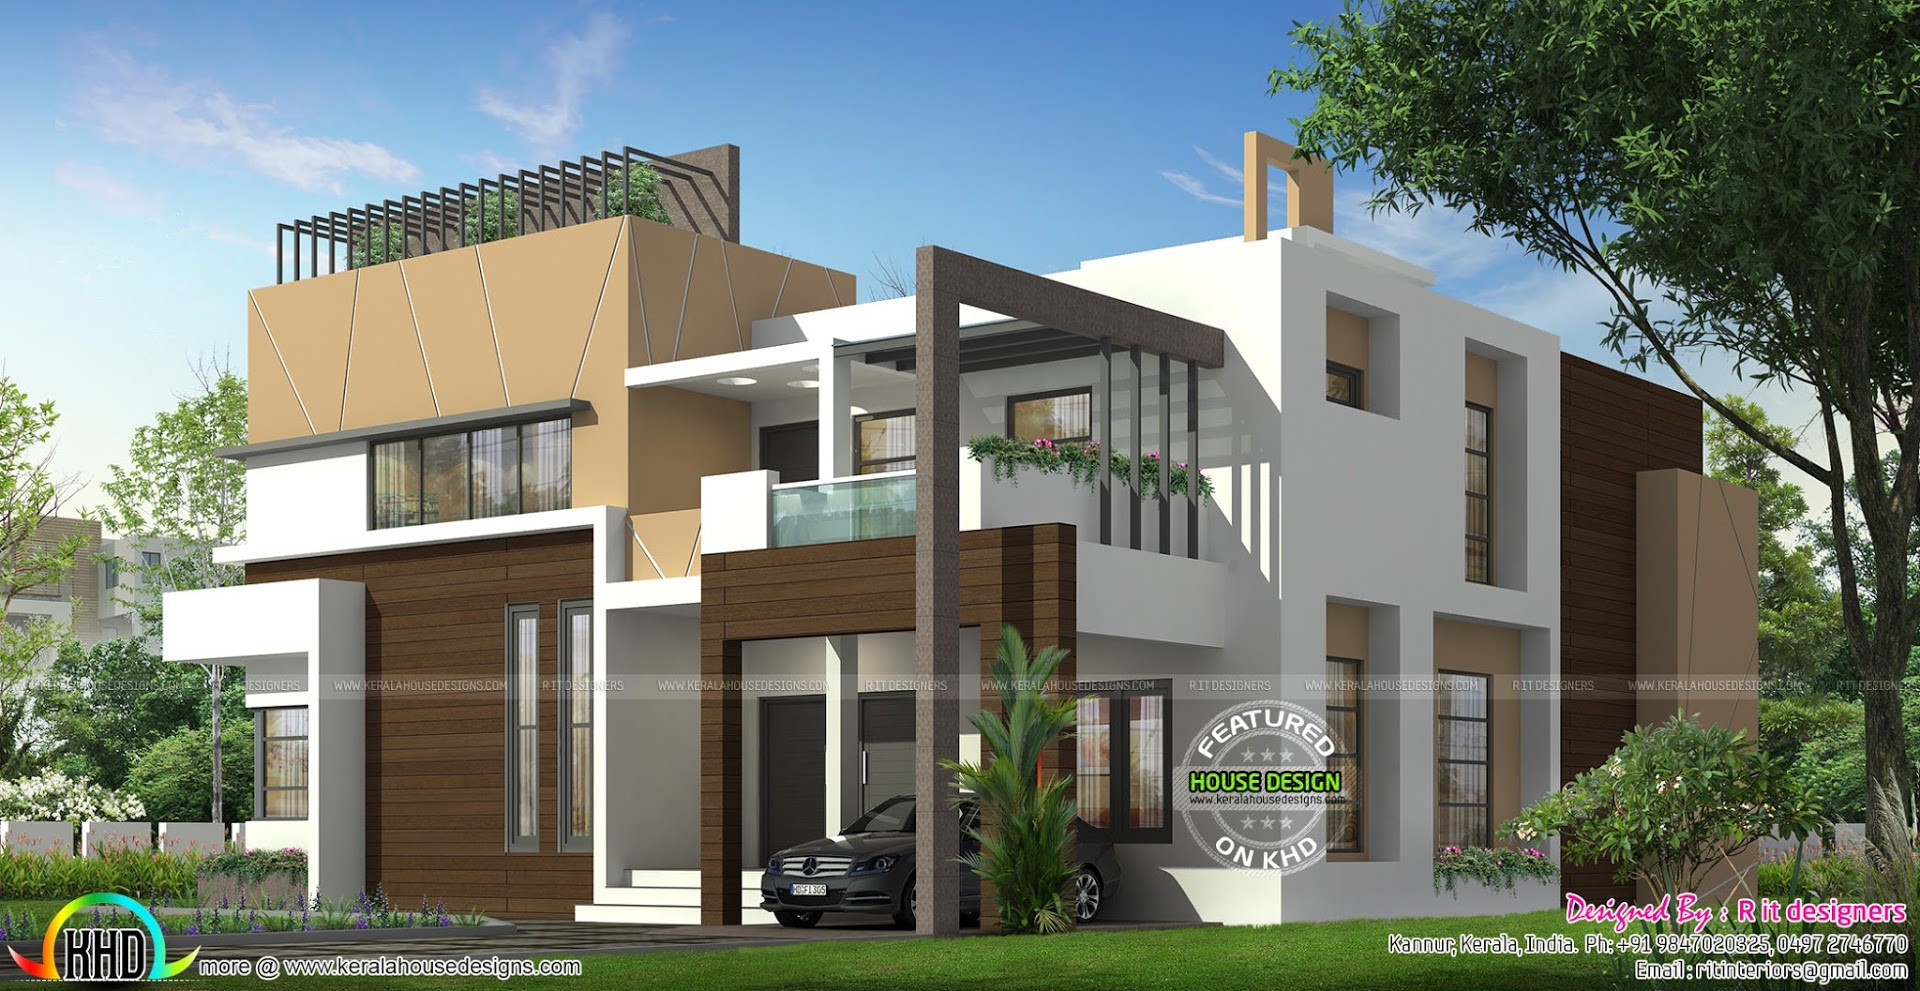 5 Bedroom Modern House Plans
 Luxurious 5 bedroom ultra modern home Kerala home design